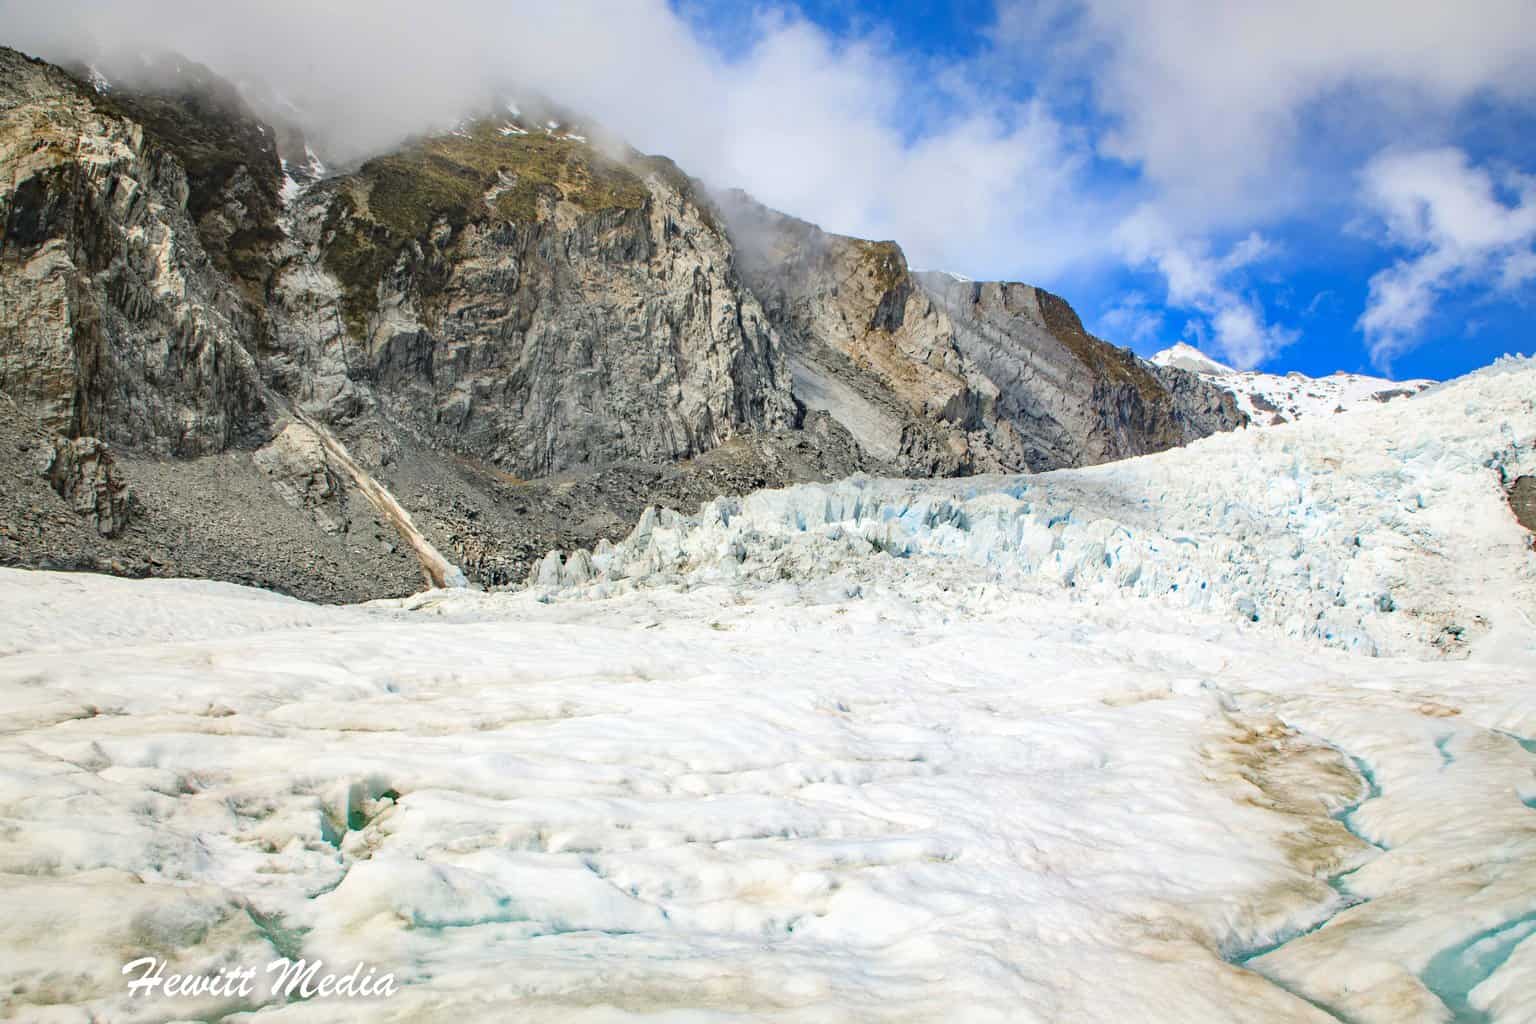 New Zealand Helicopter Tours - Franz Josef Glacier